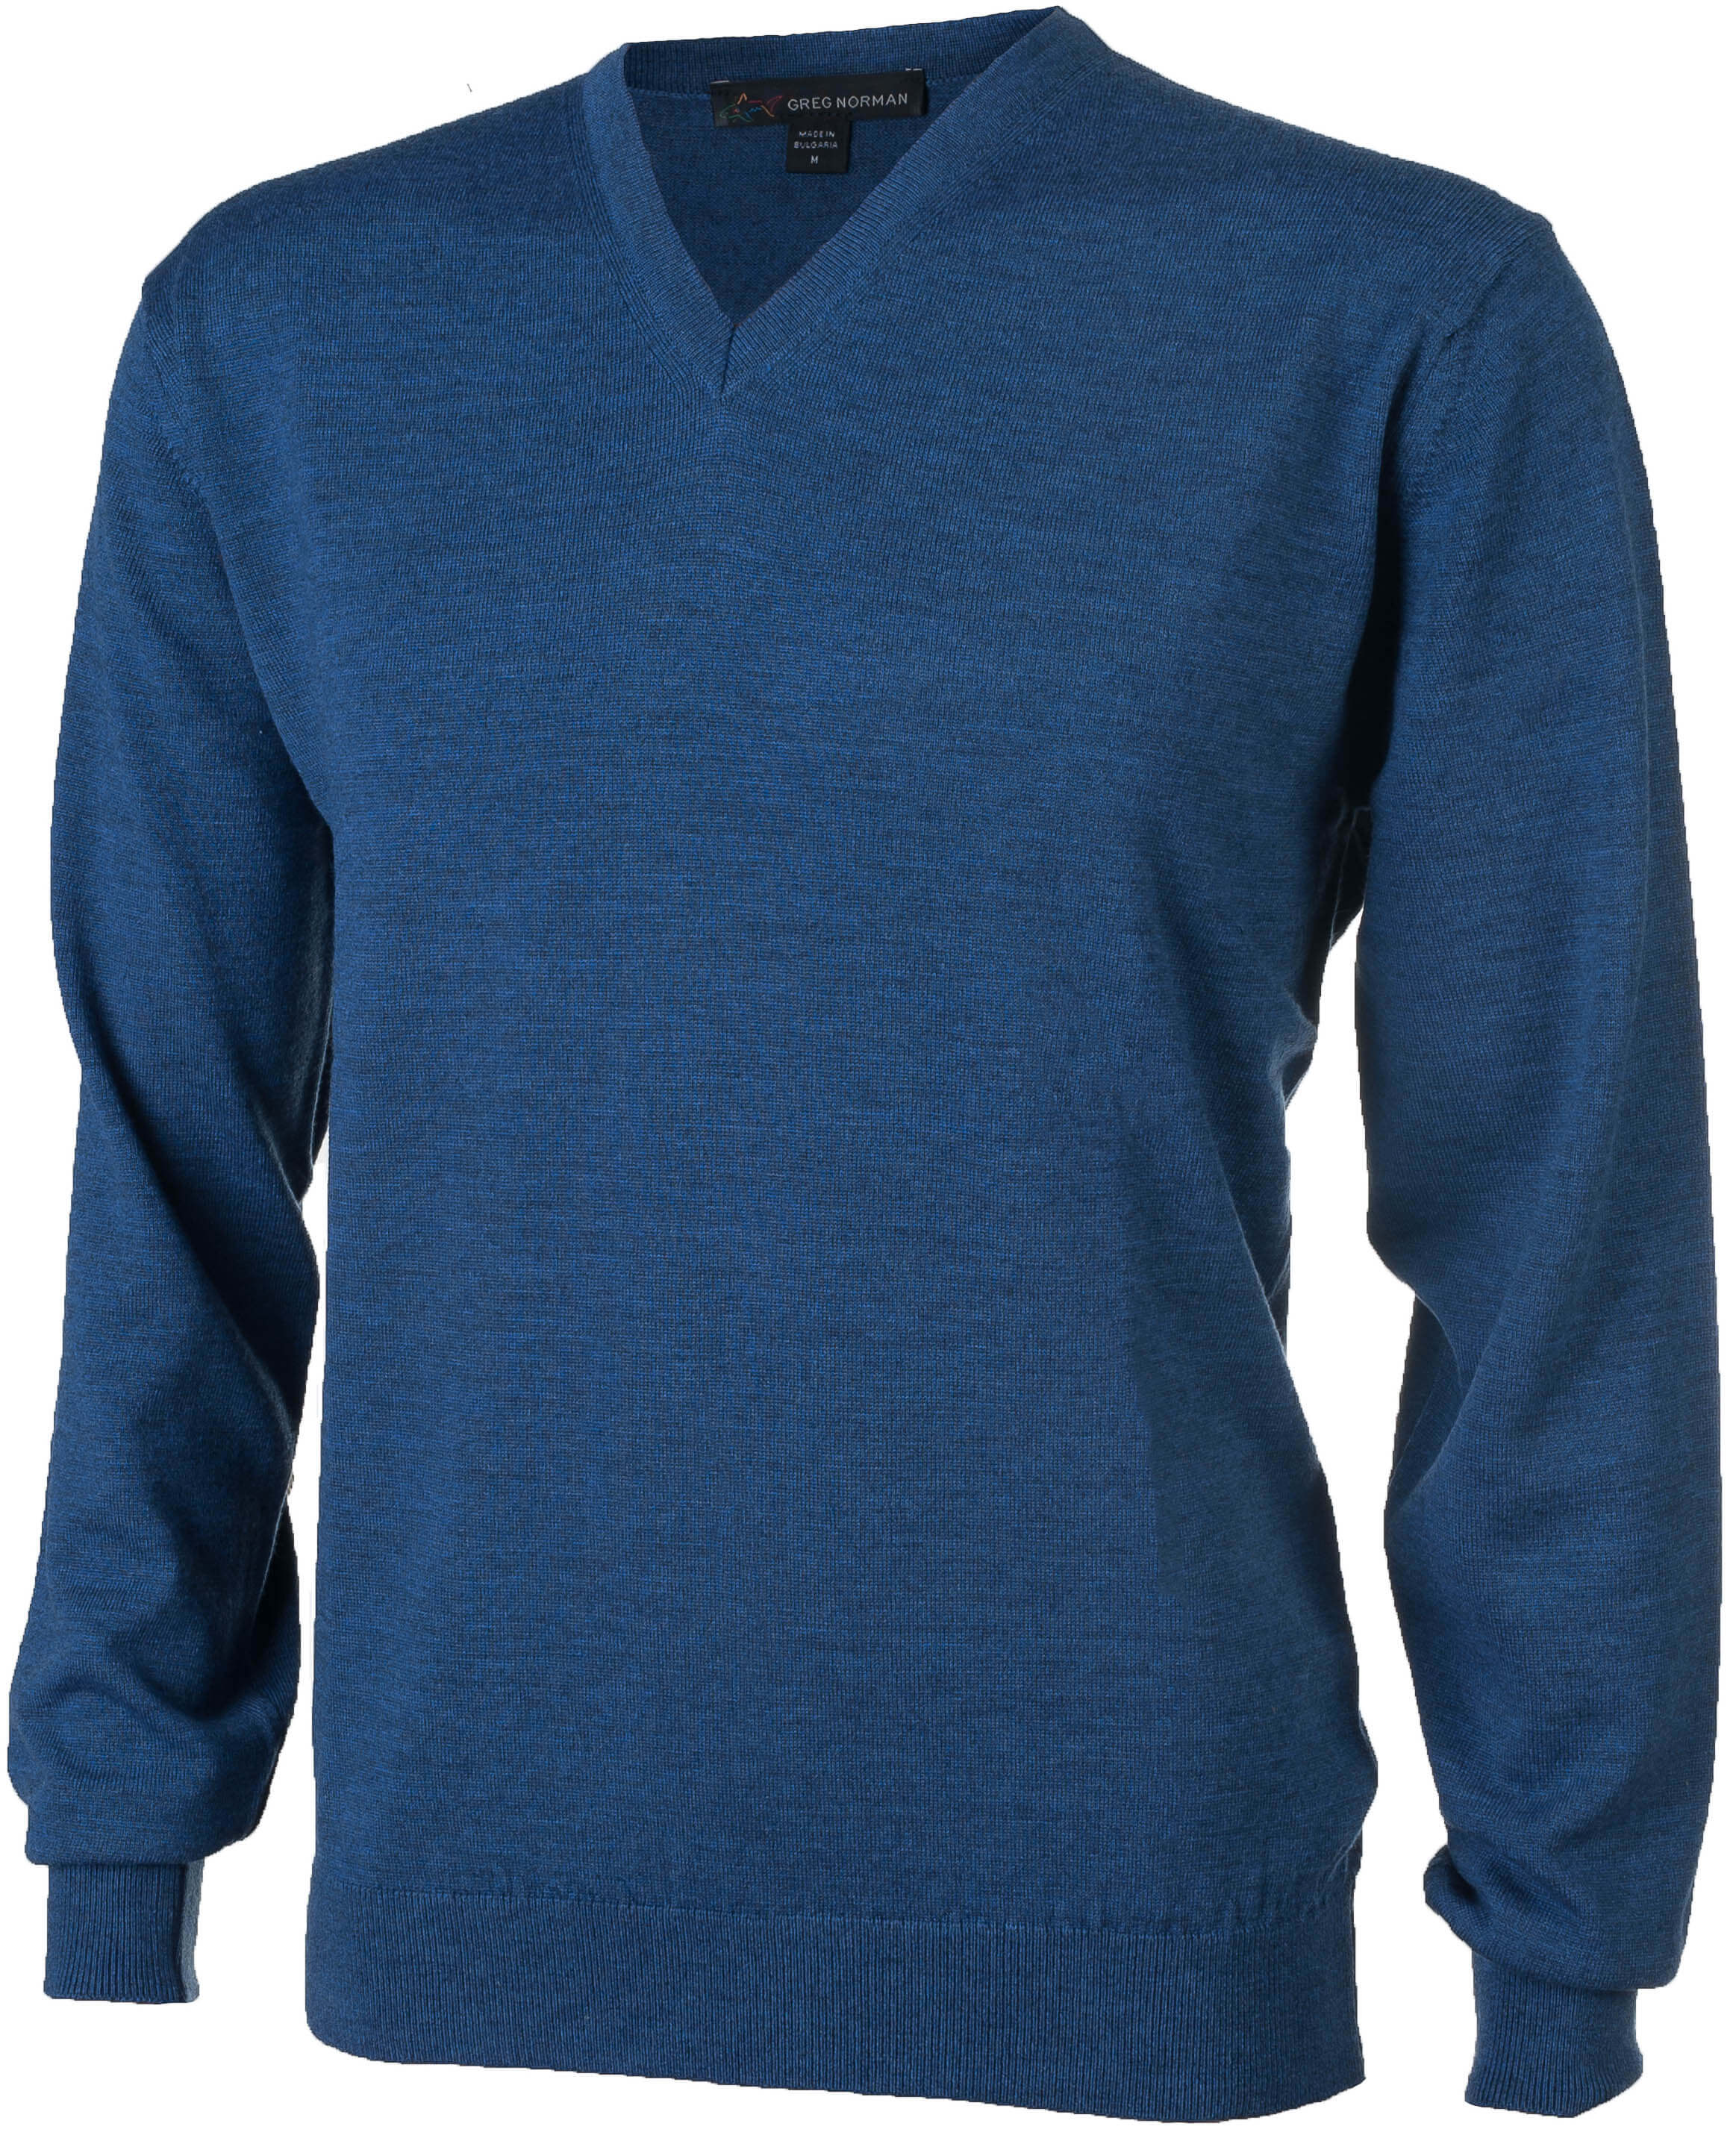 Greg Norman Merino V-Neck Pullover, jeans blue